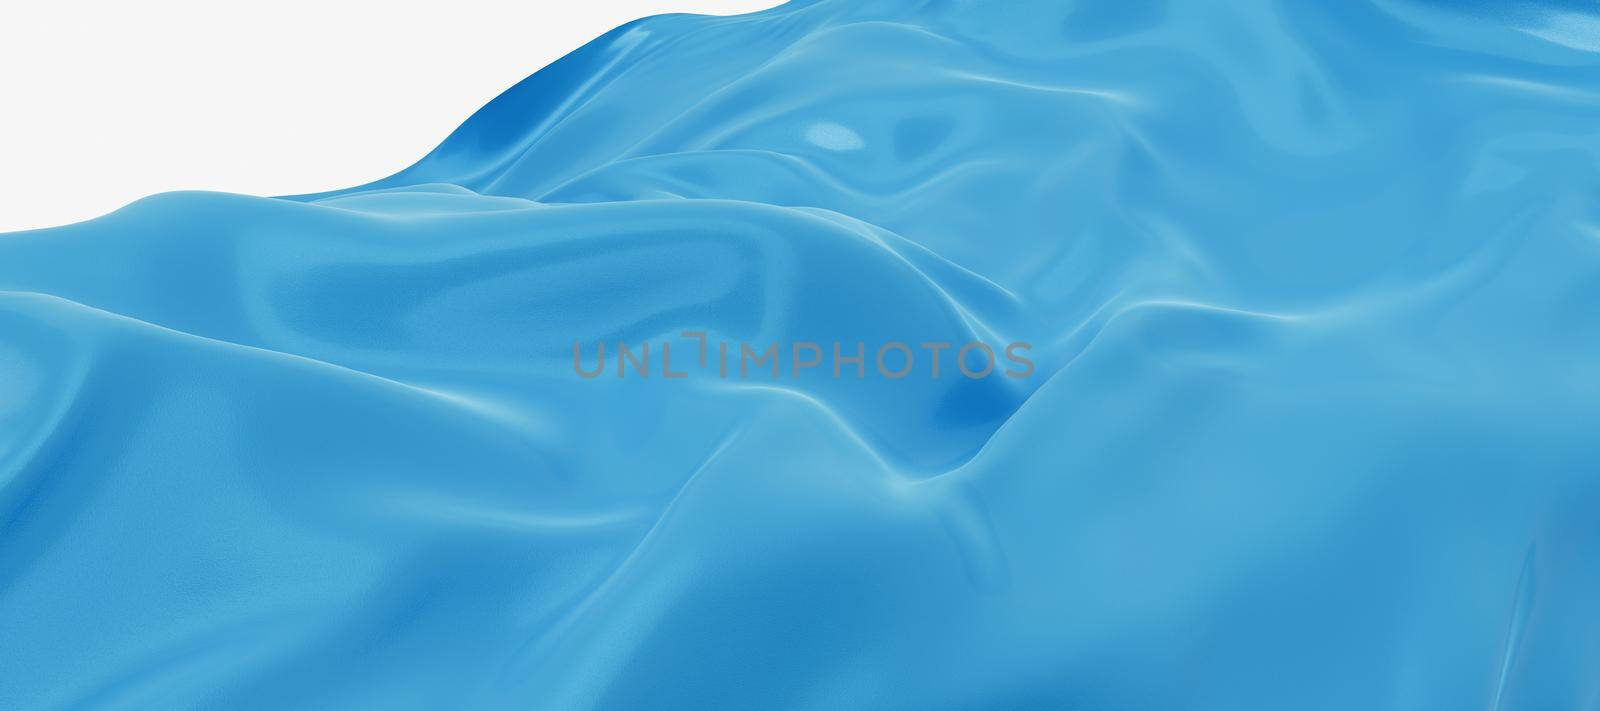 Flowing blue wave cloth, 3d rendering. by vinkfan